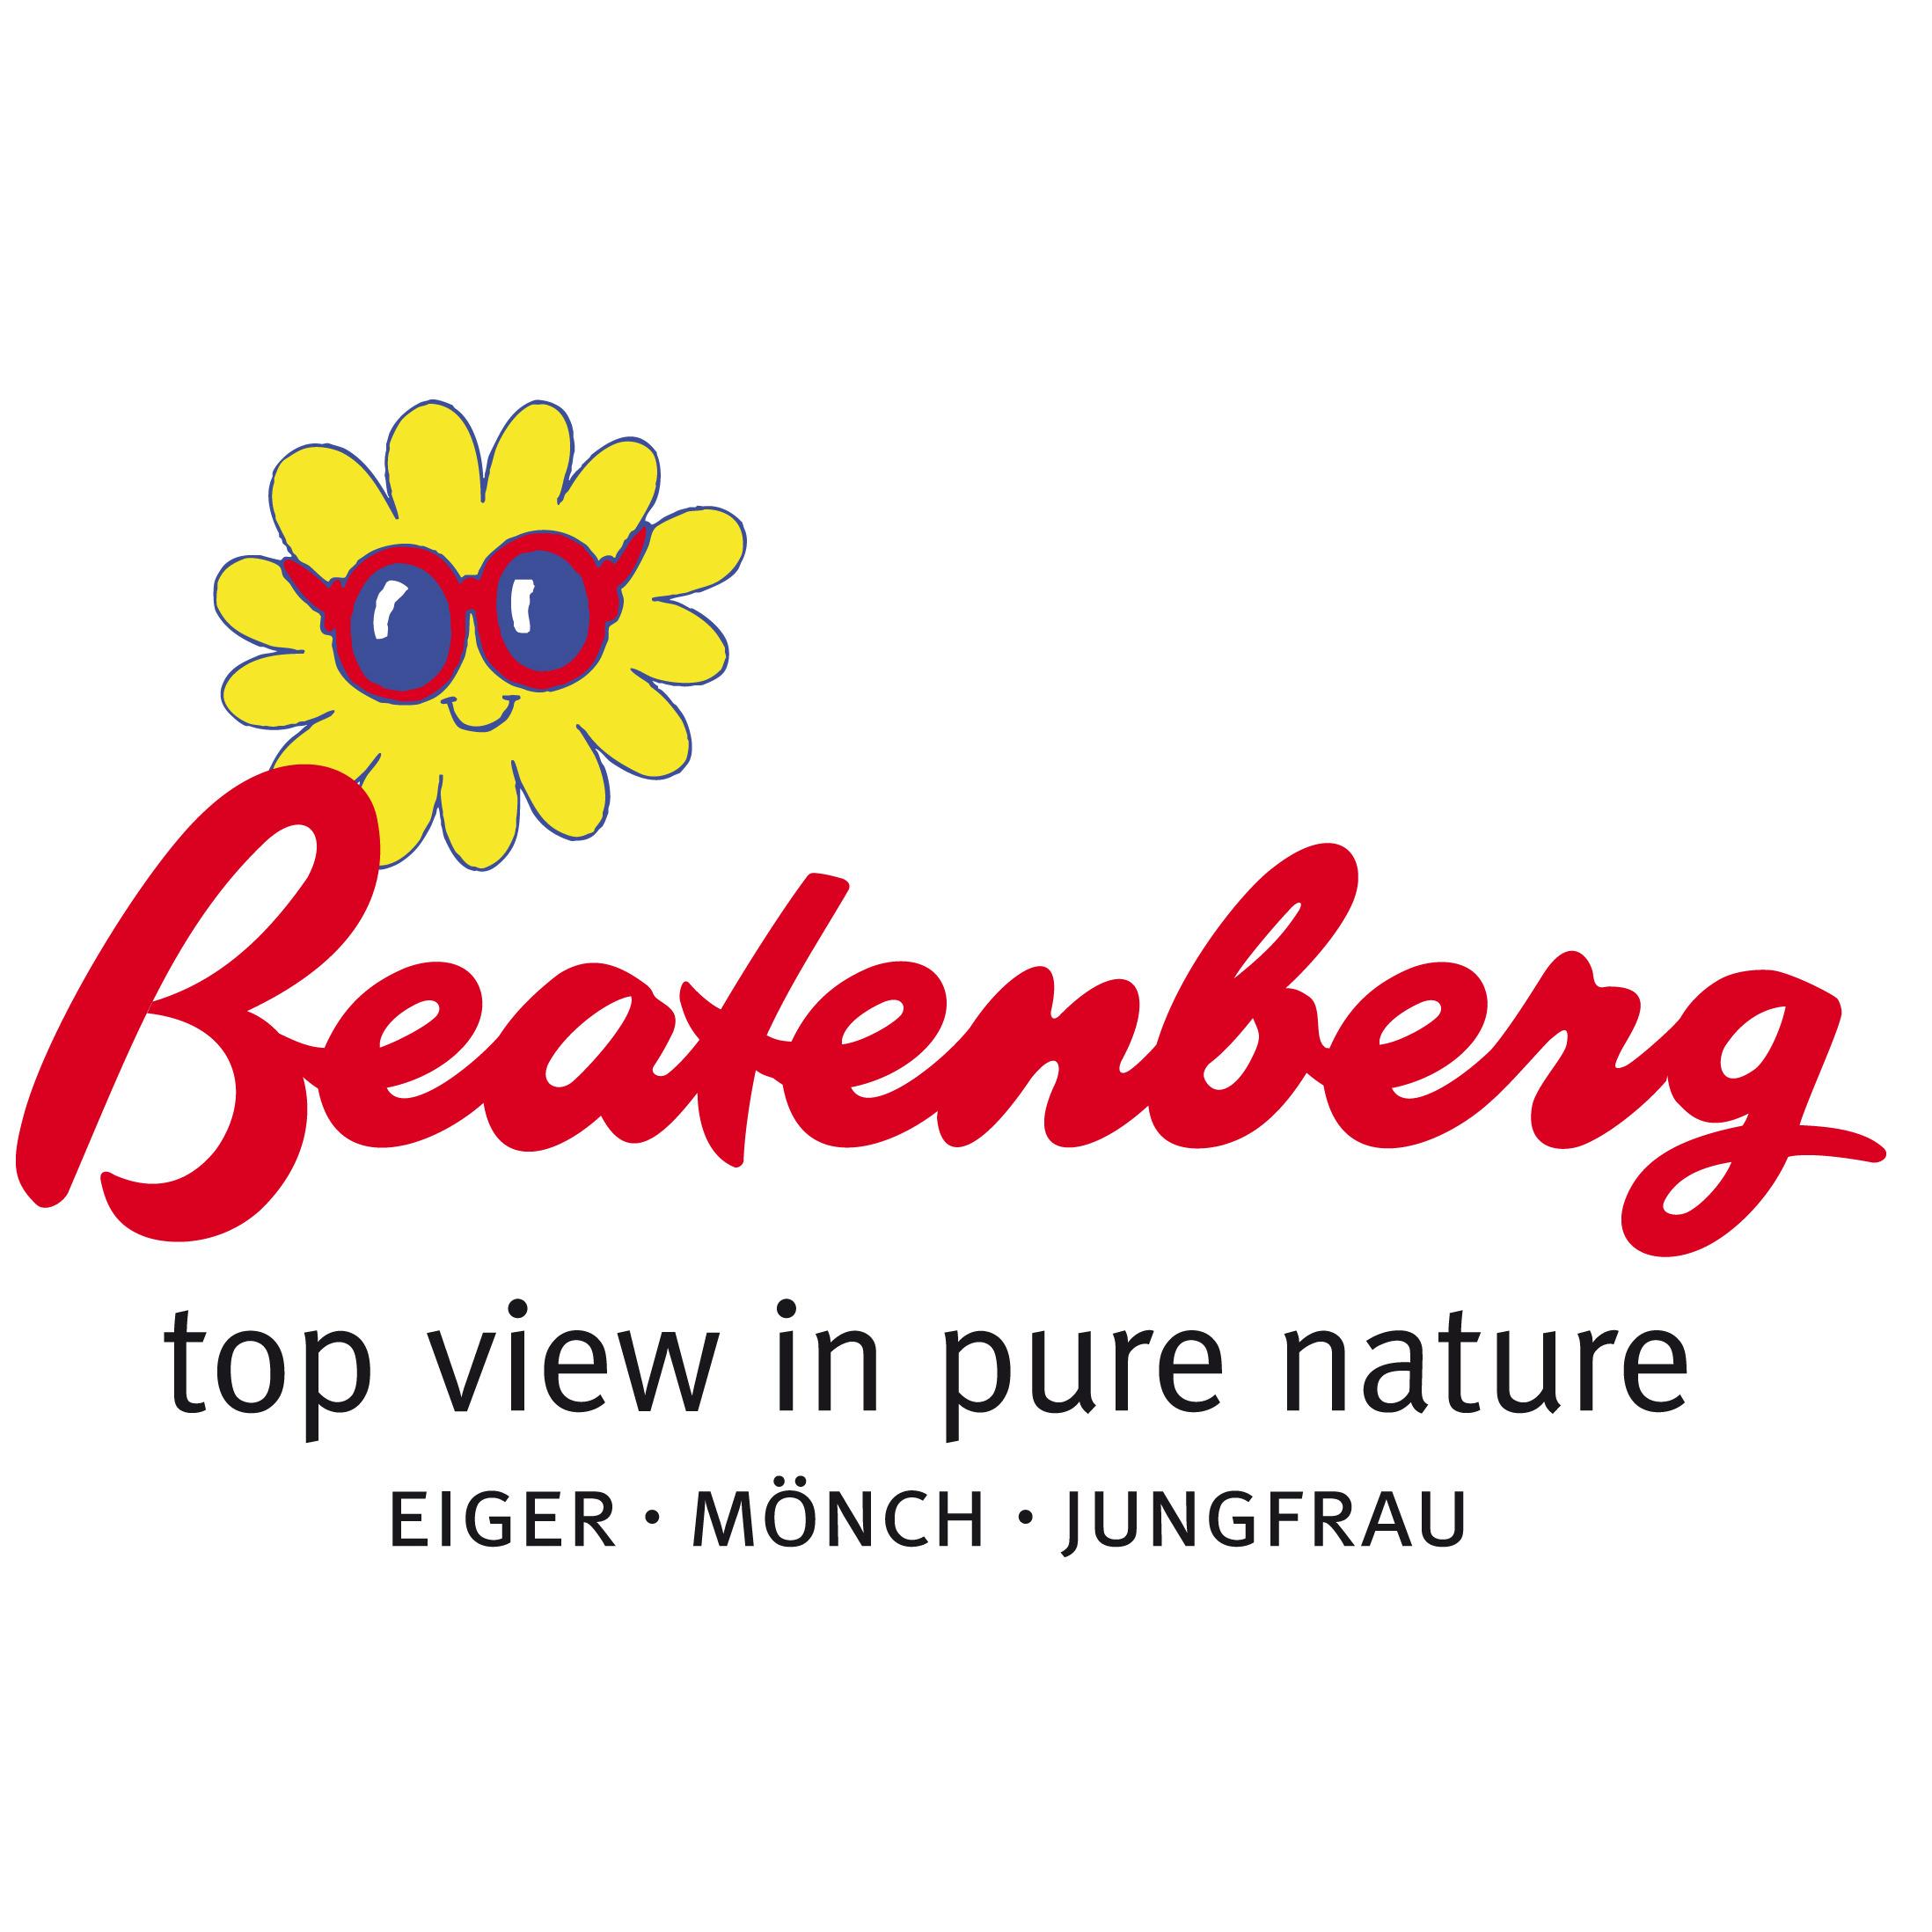 Beatenberg Tourismus Info Logo